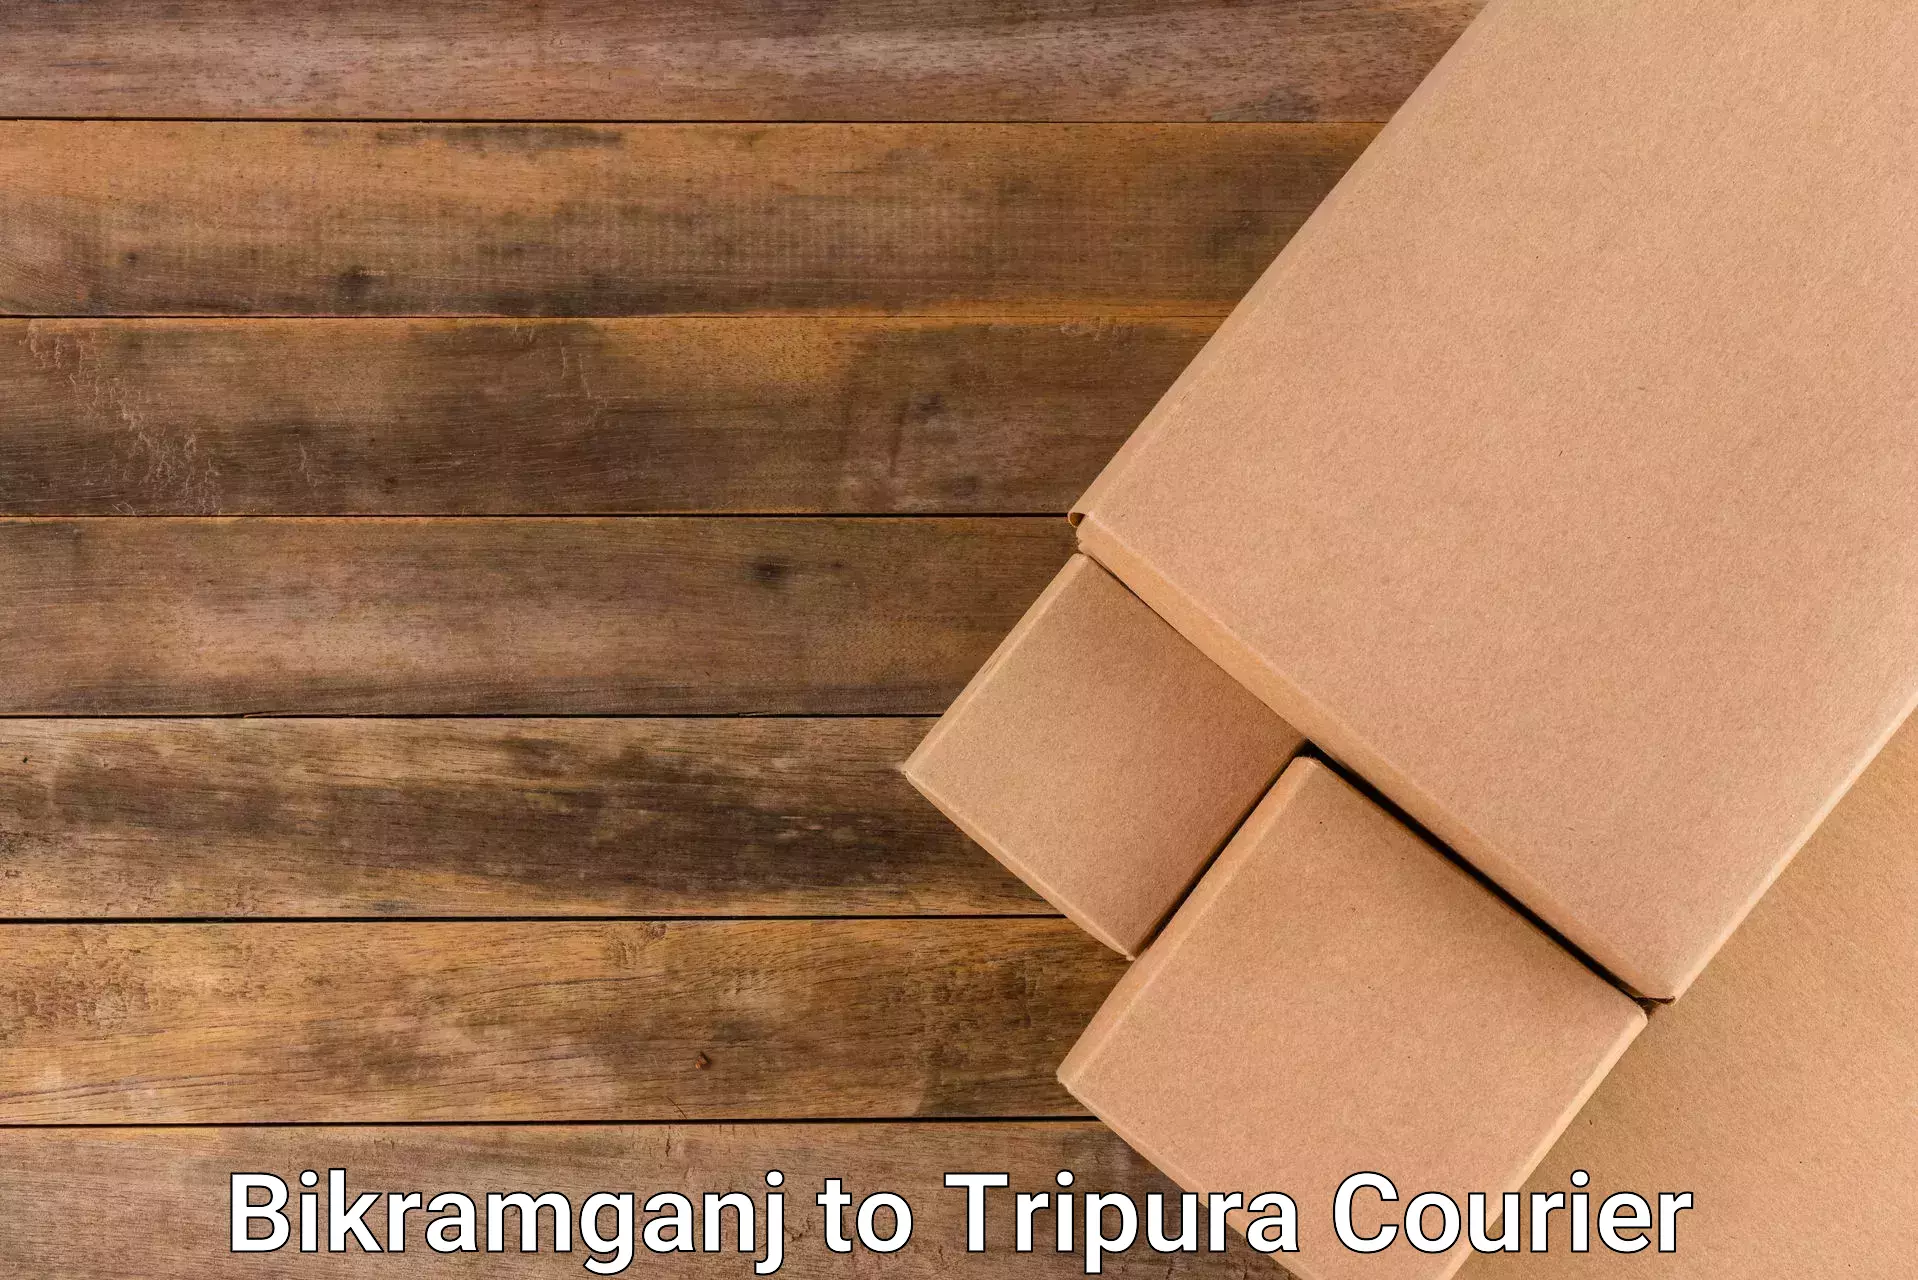 Courier service comparison Bikramganj to Khowai